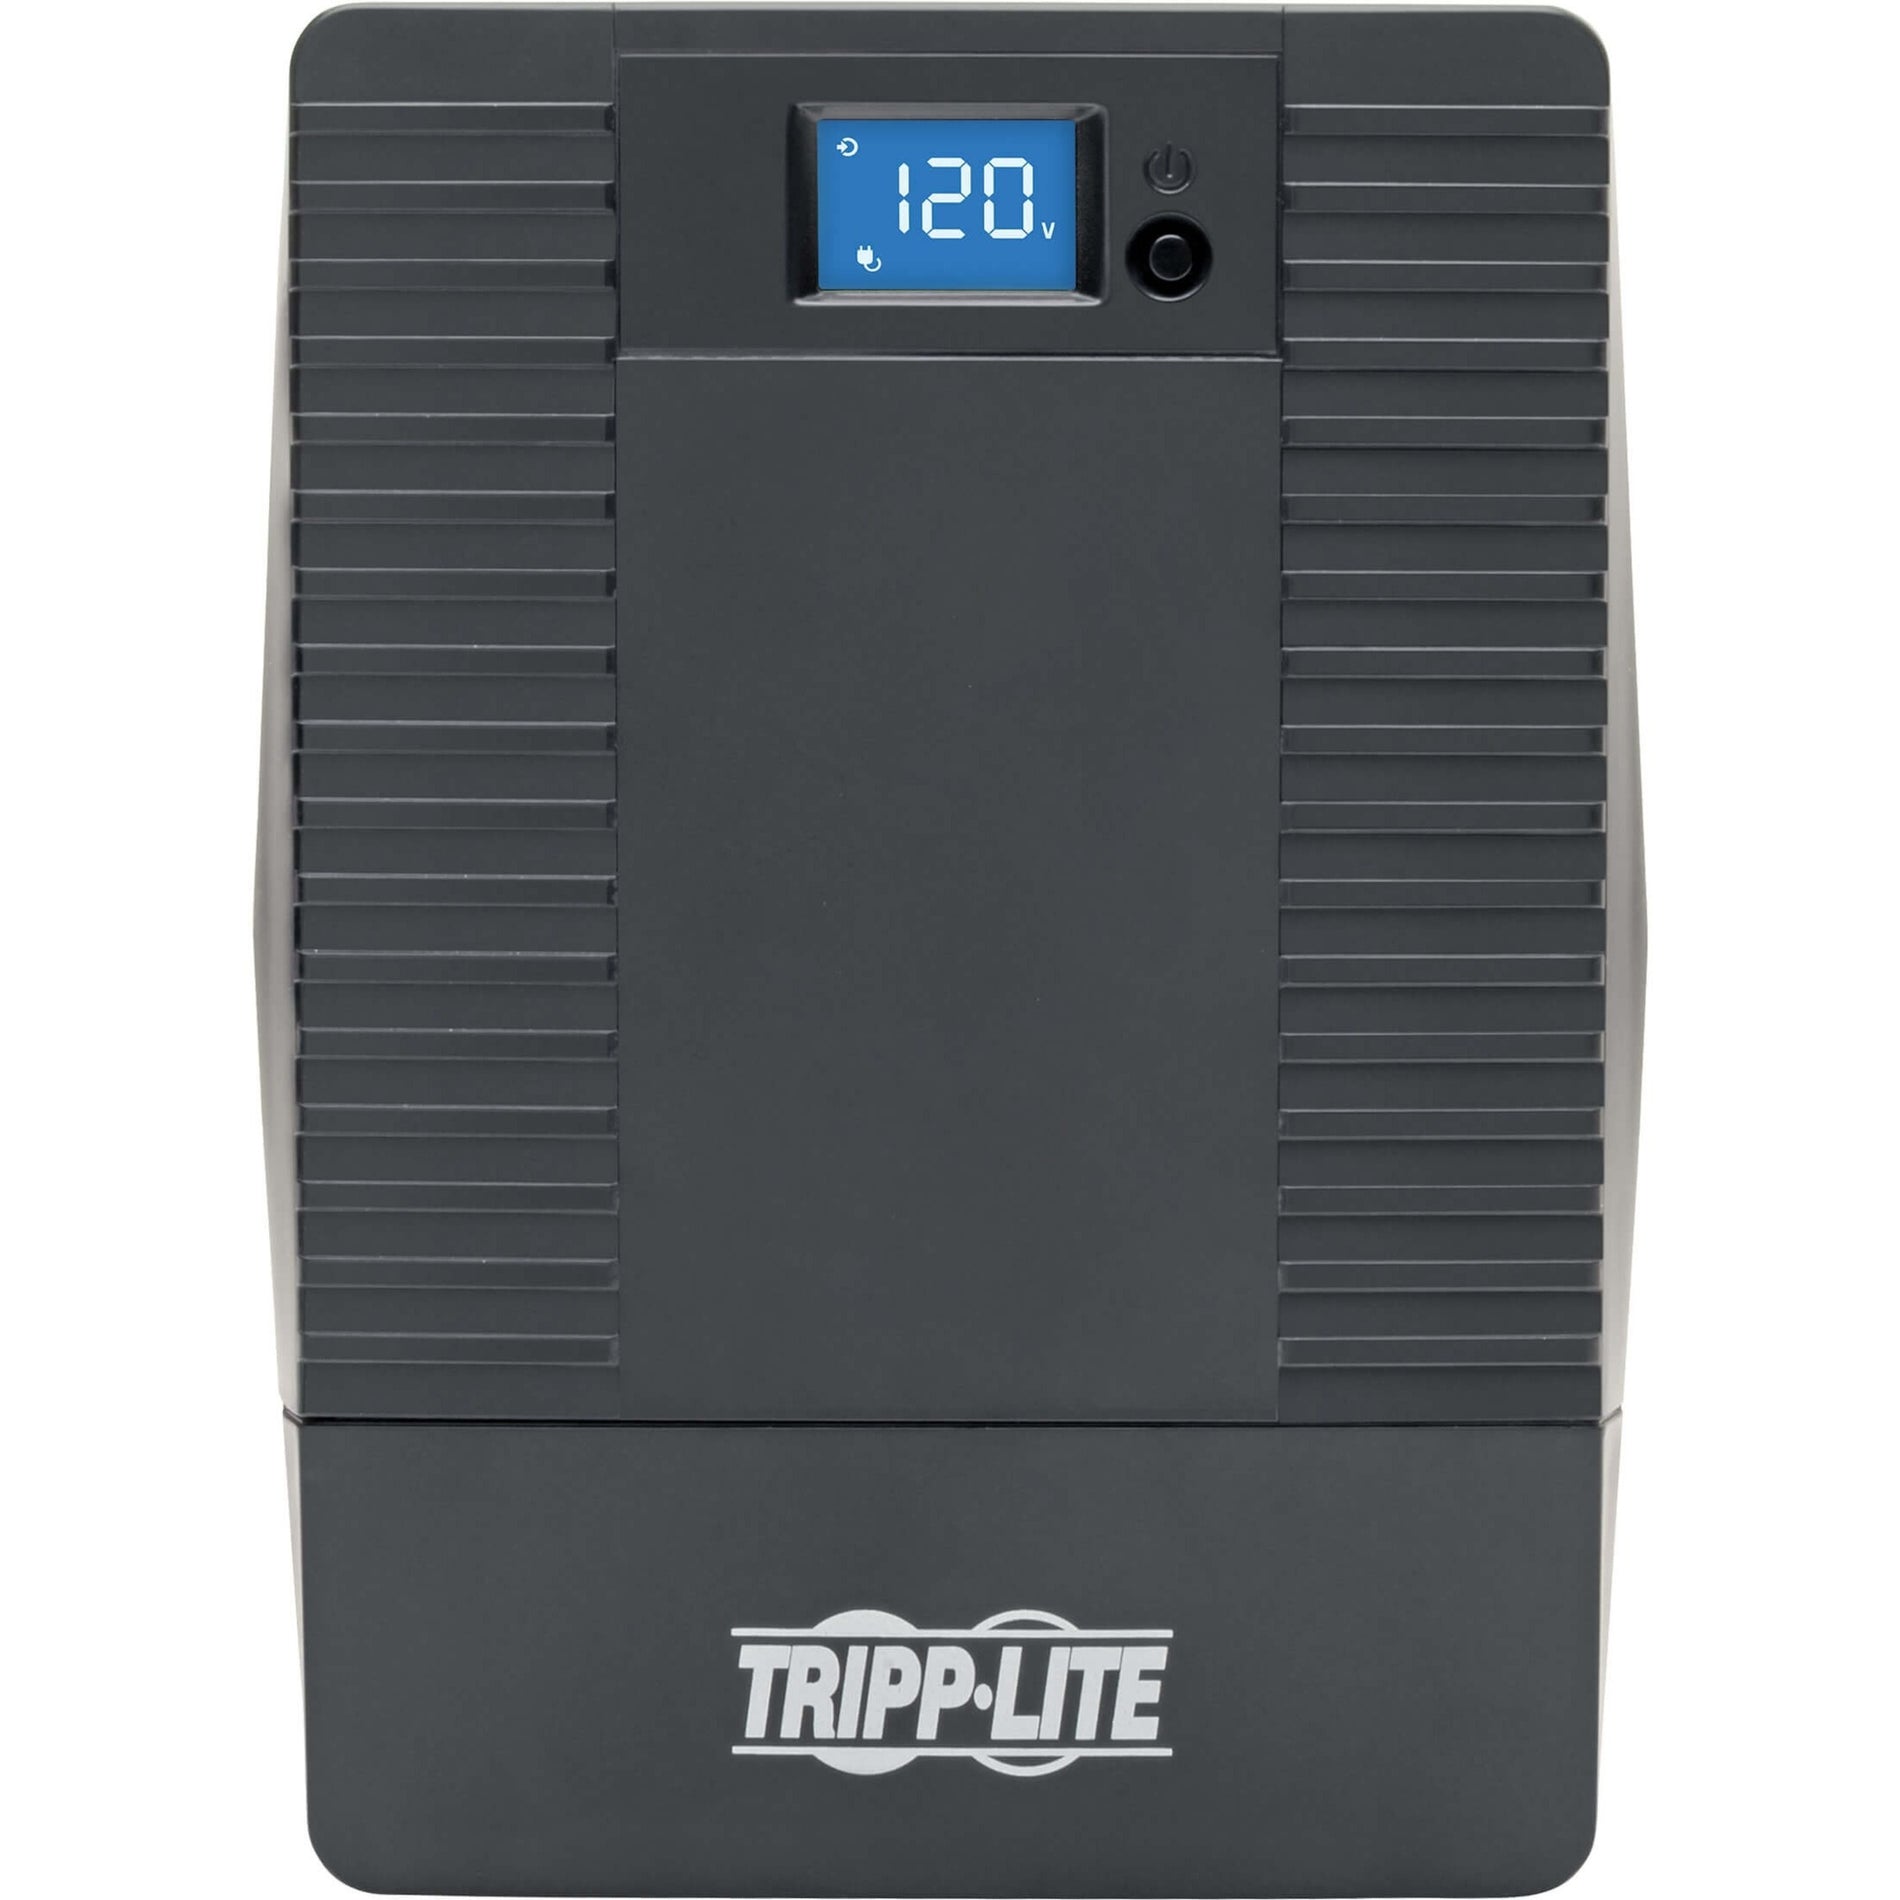 Tripp Lite OMNIVS800LCD 800VA Tower UPS, 475W Line-Interactive, LCD Display, 3-Year Warranty